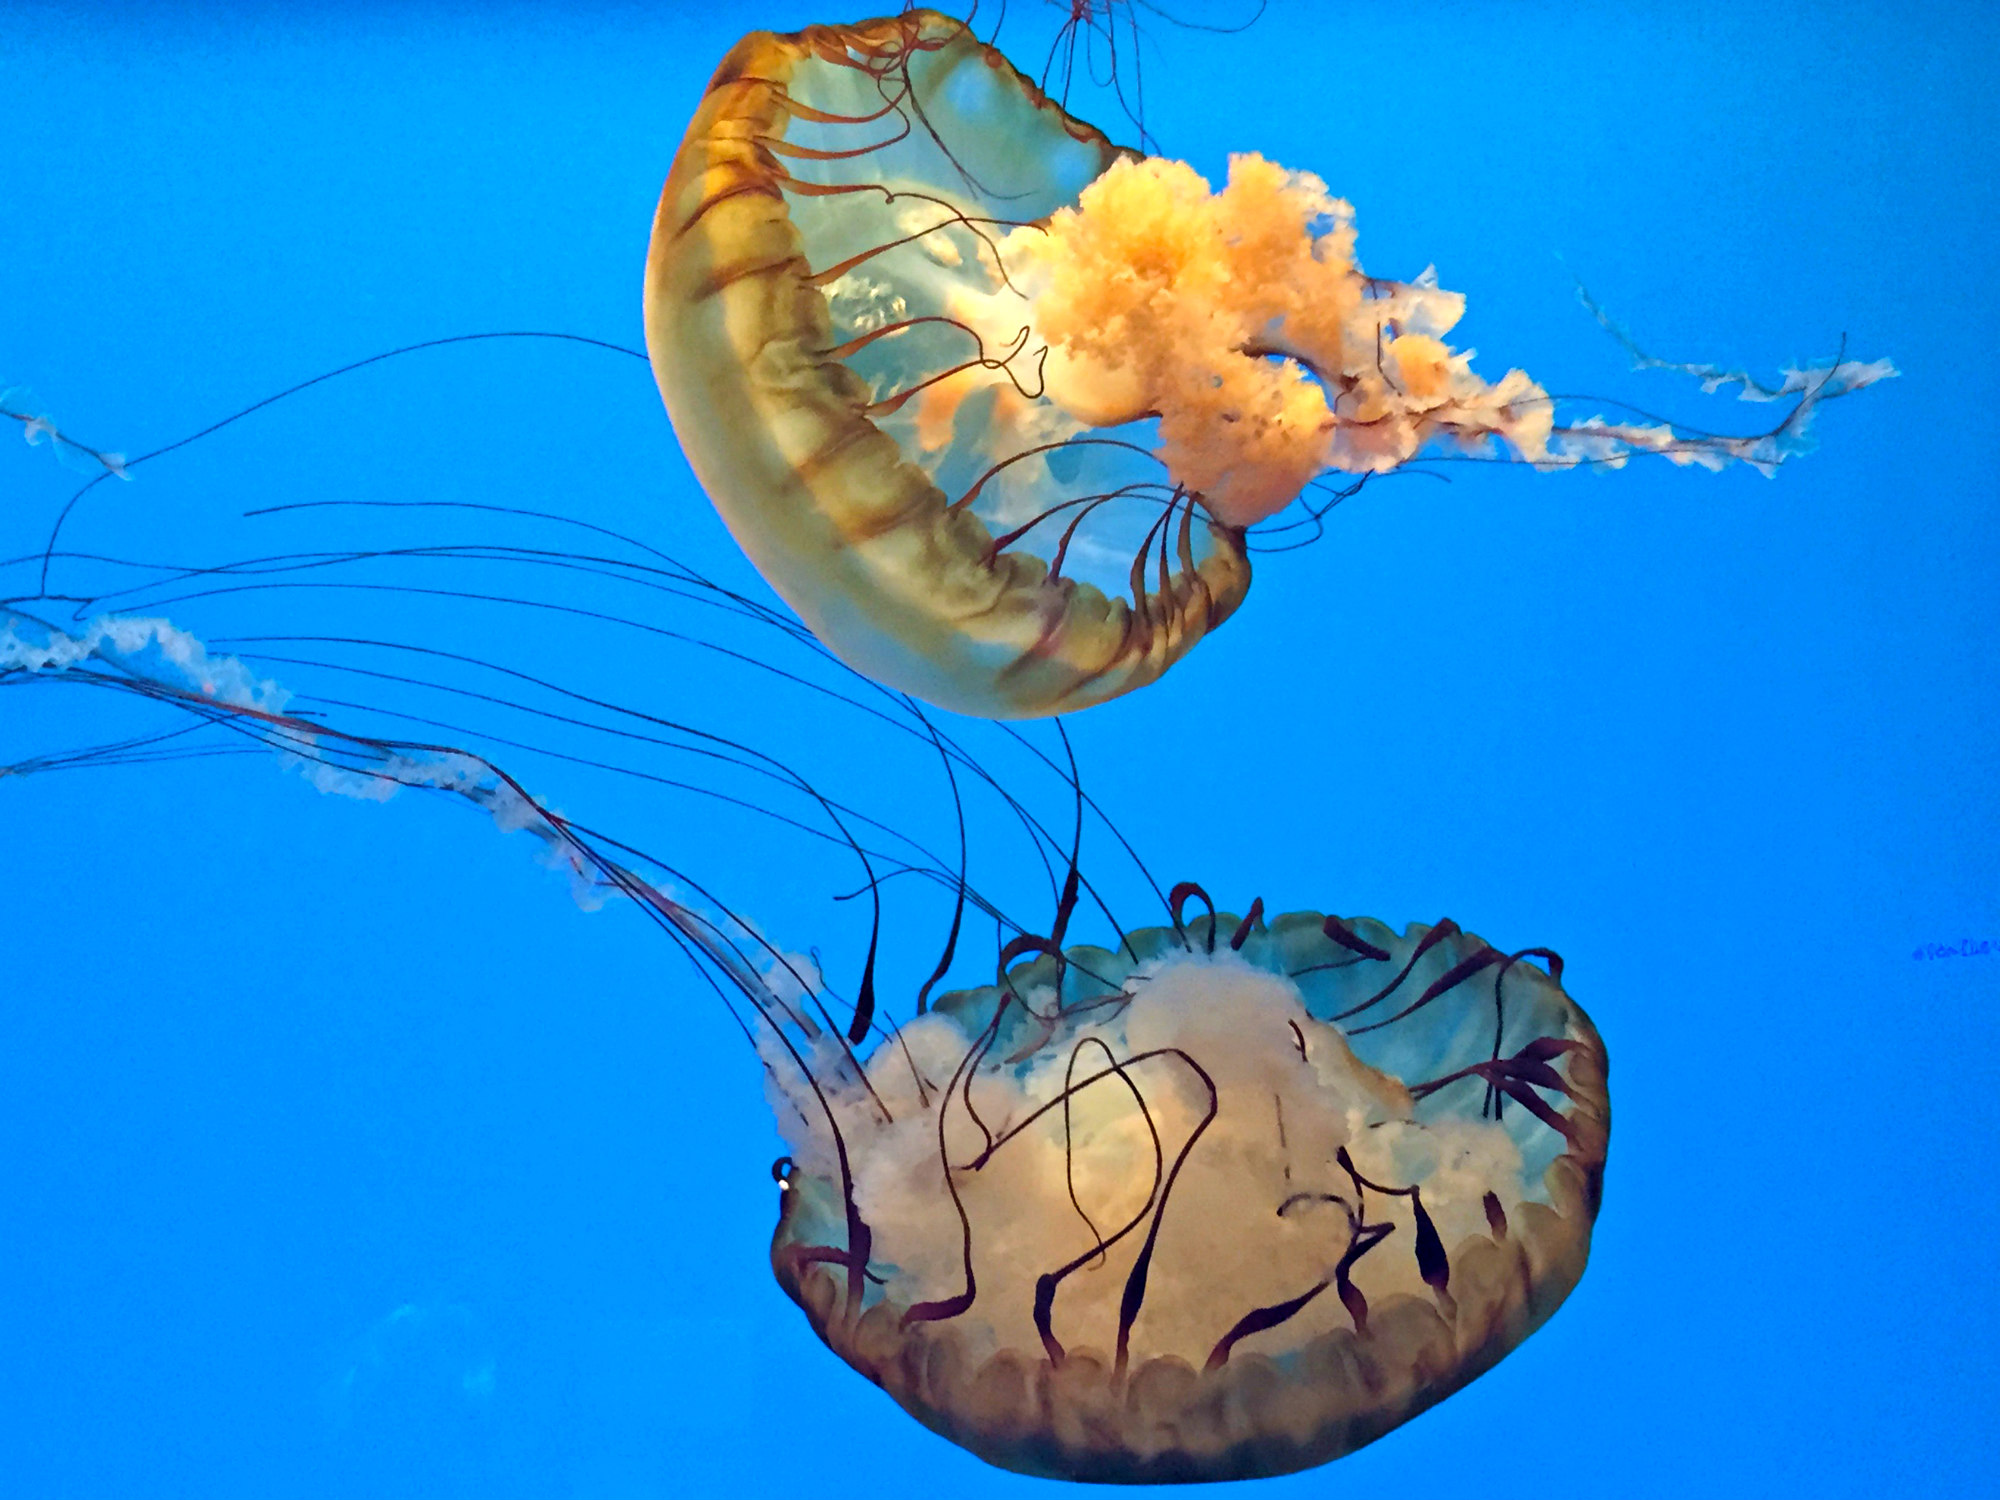 Pair of yellow-hued box jellyfish swim in an aquarium.